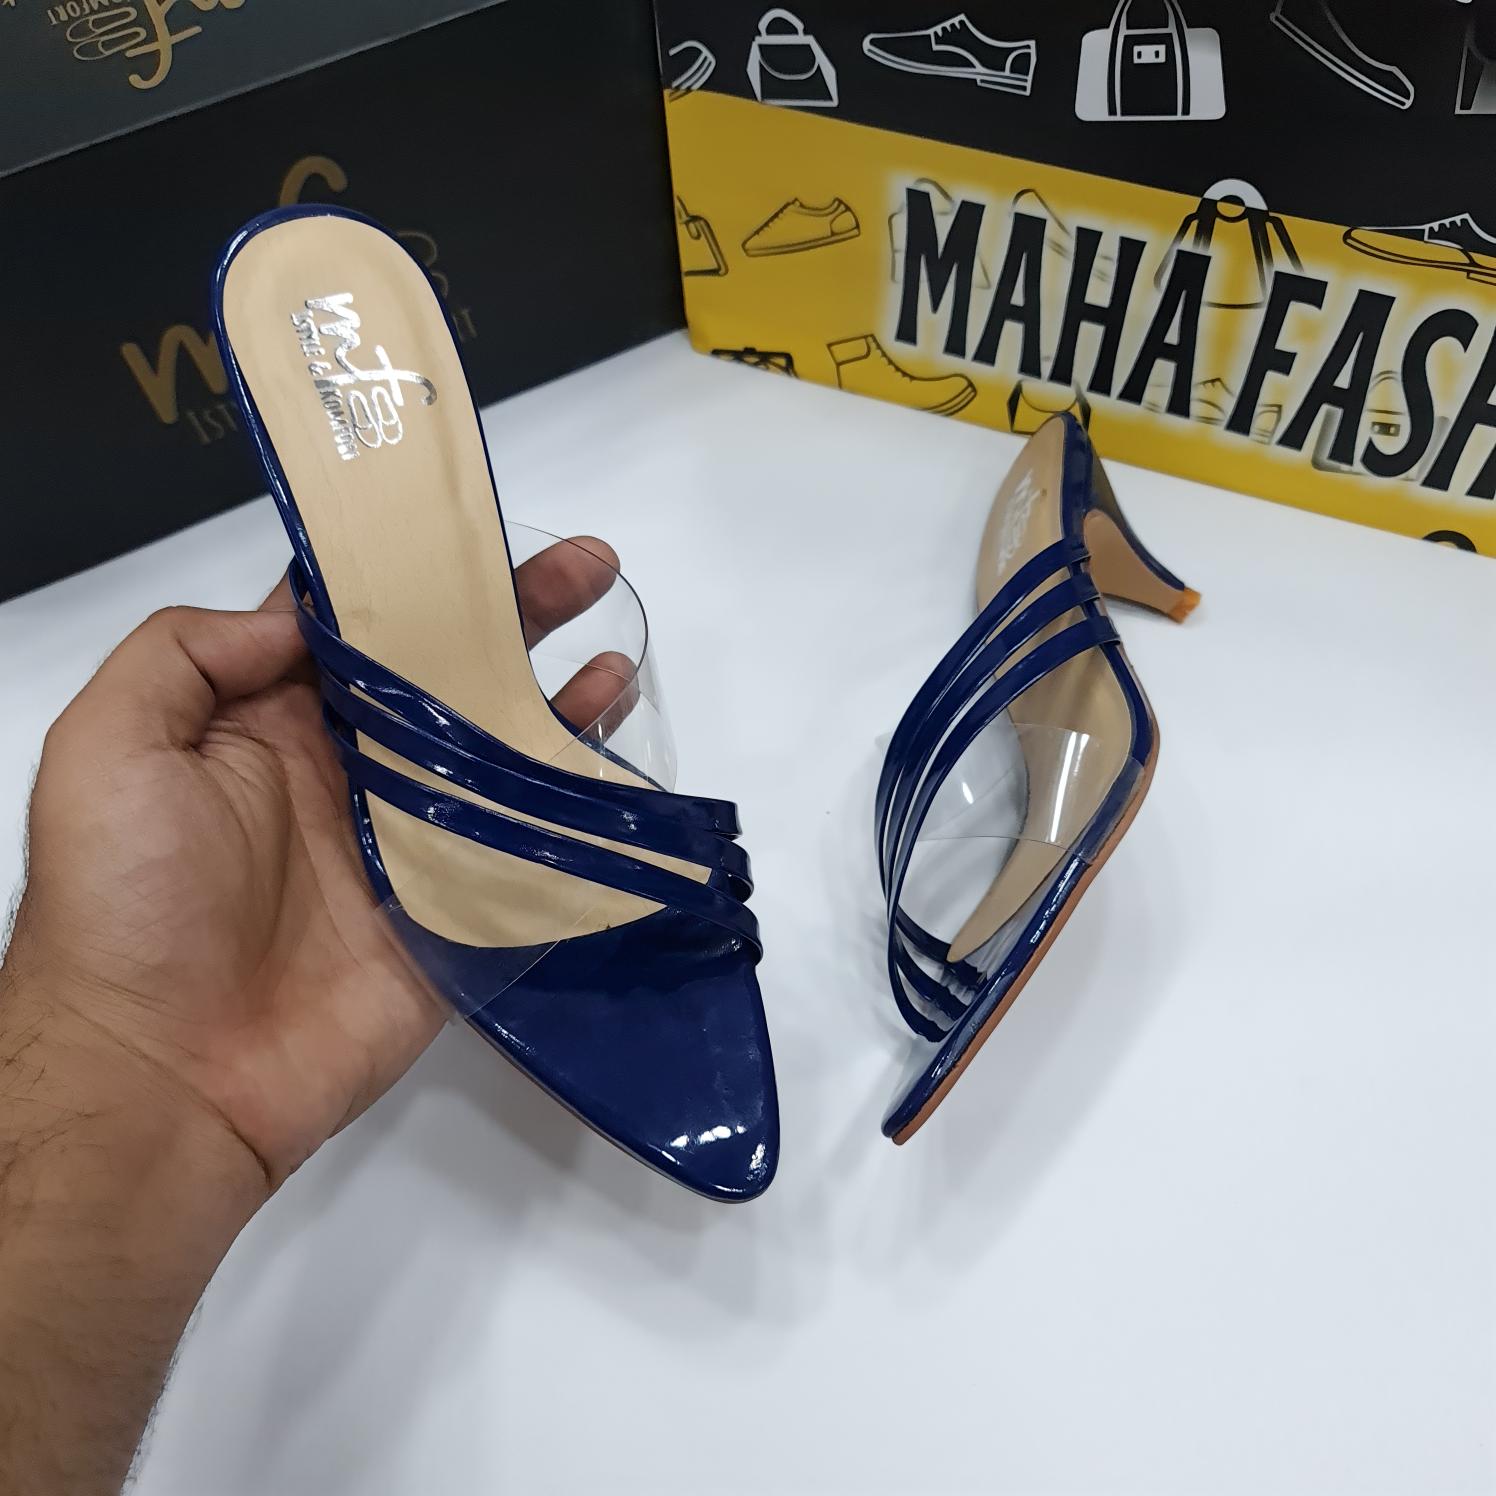 RW-044 - Maha fashions -  